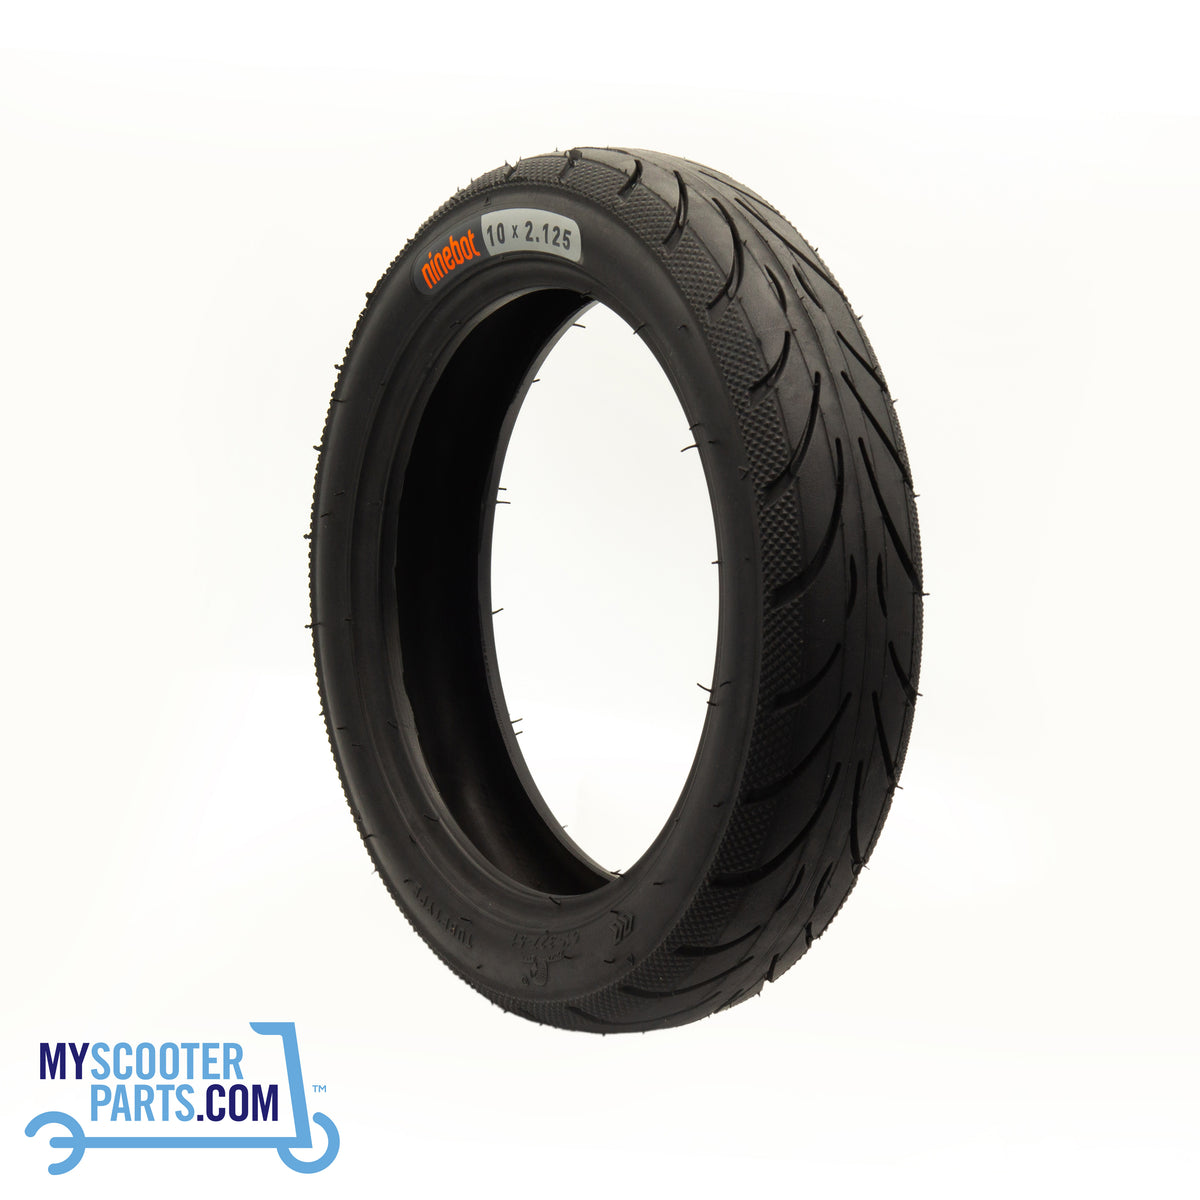 Tyre, original Segway Ninebot tyre, 10x2.125